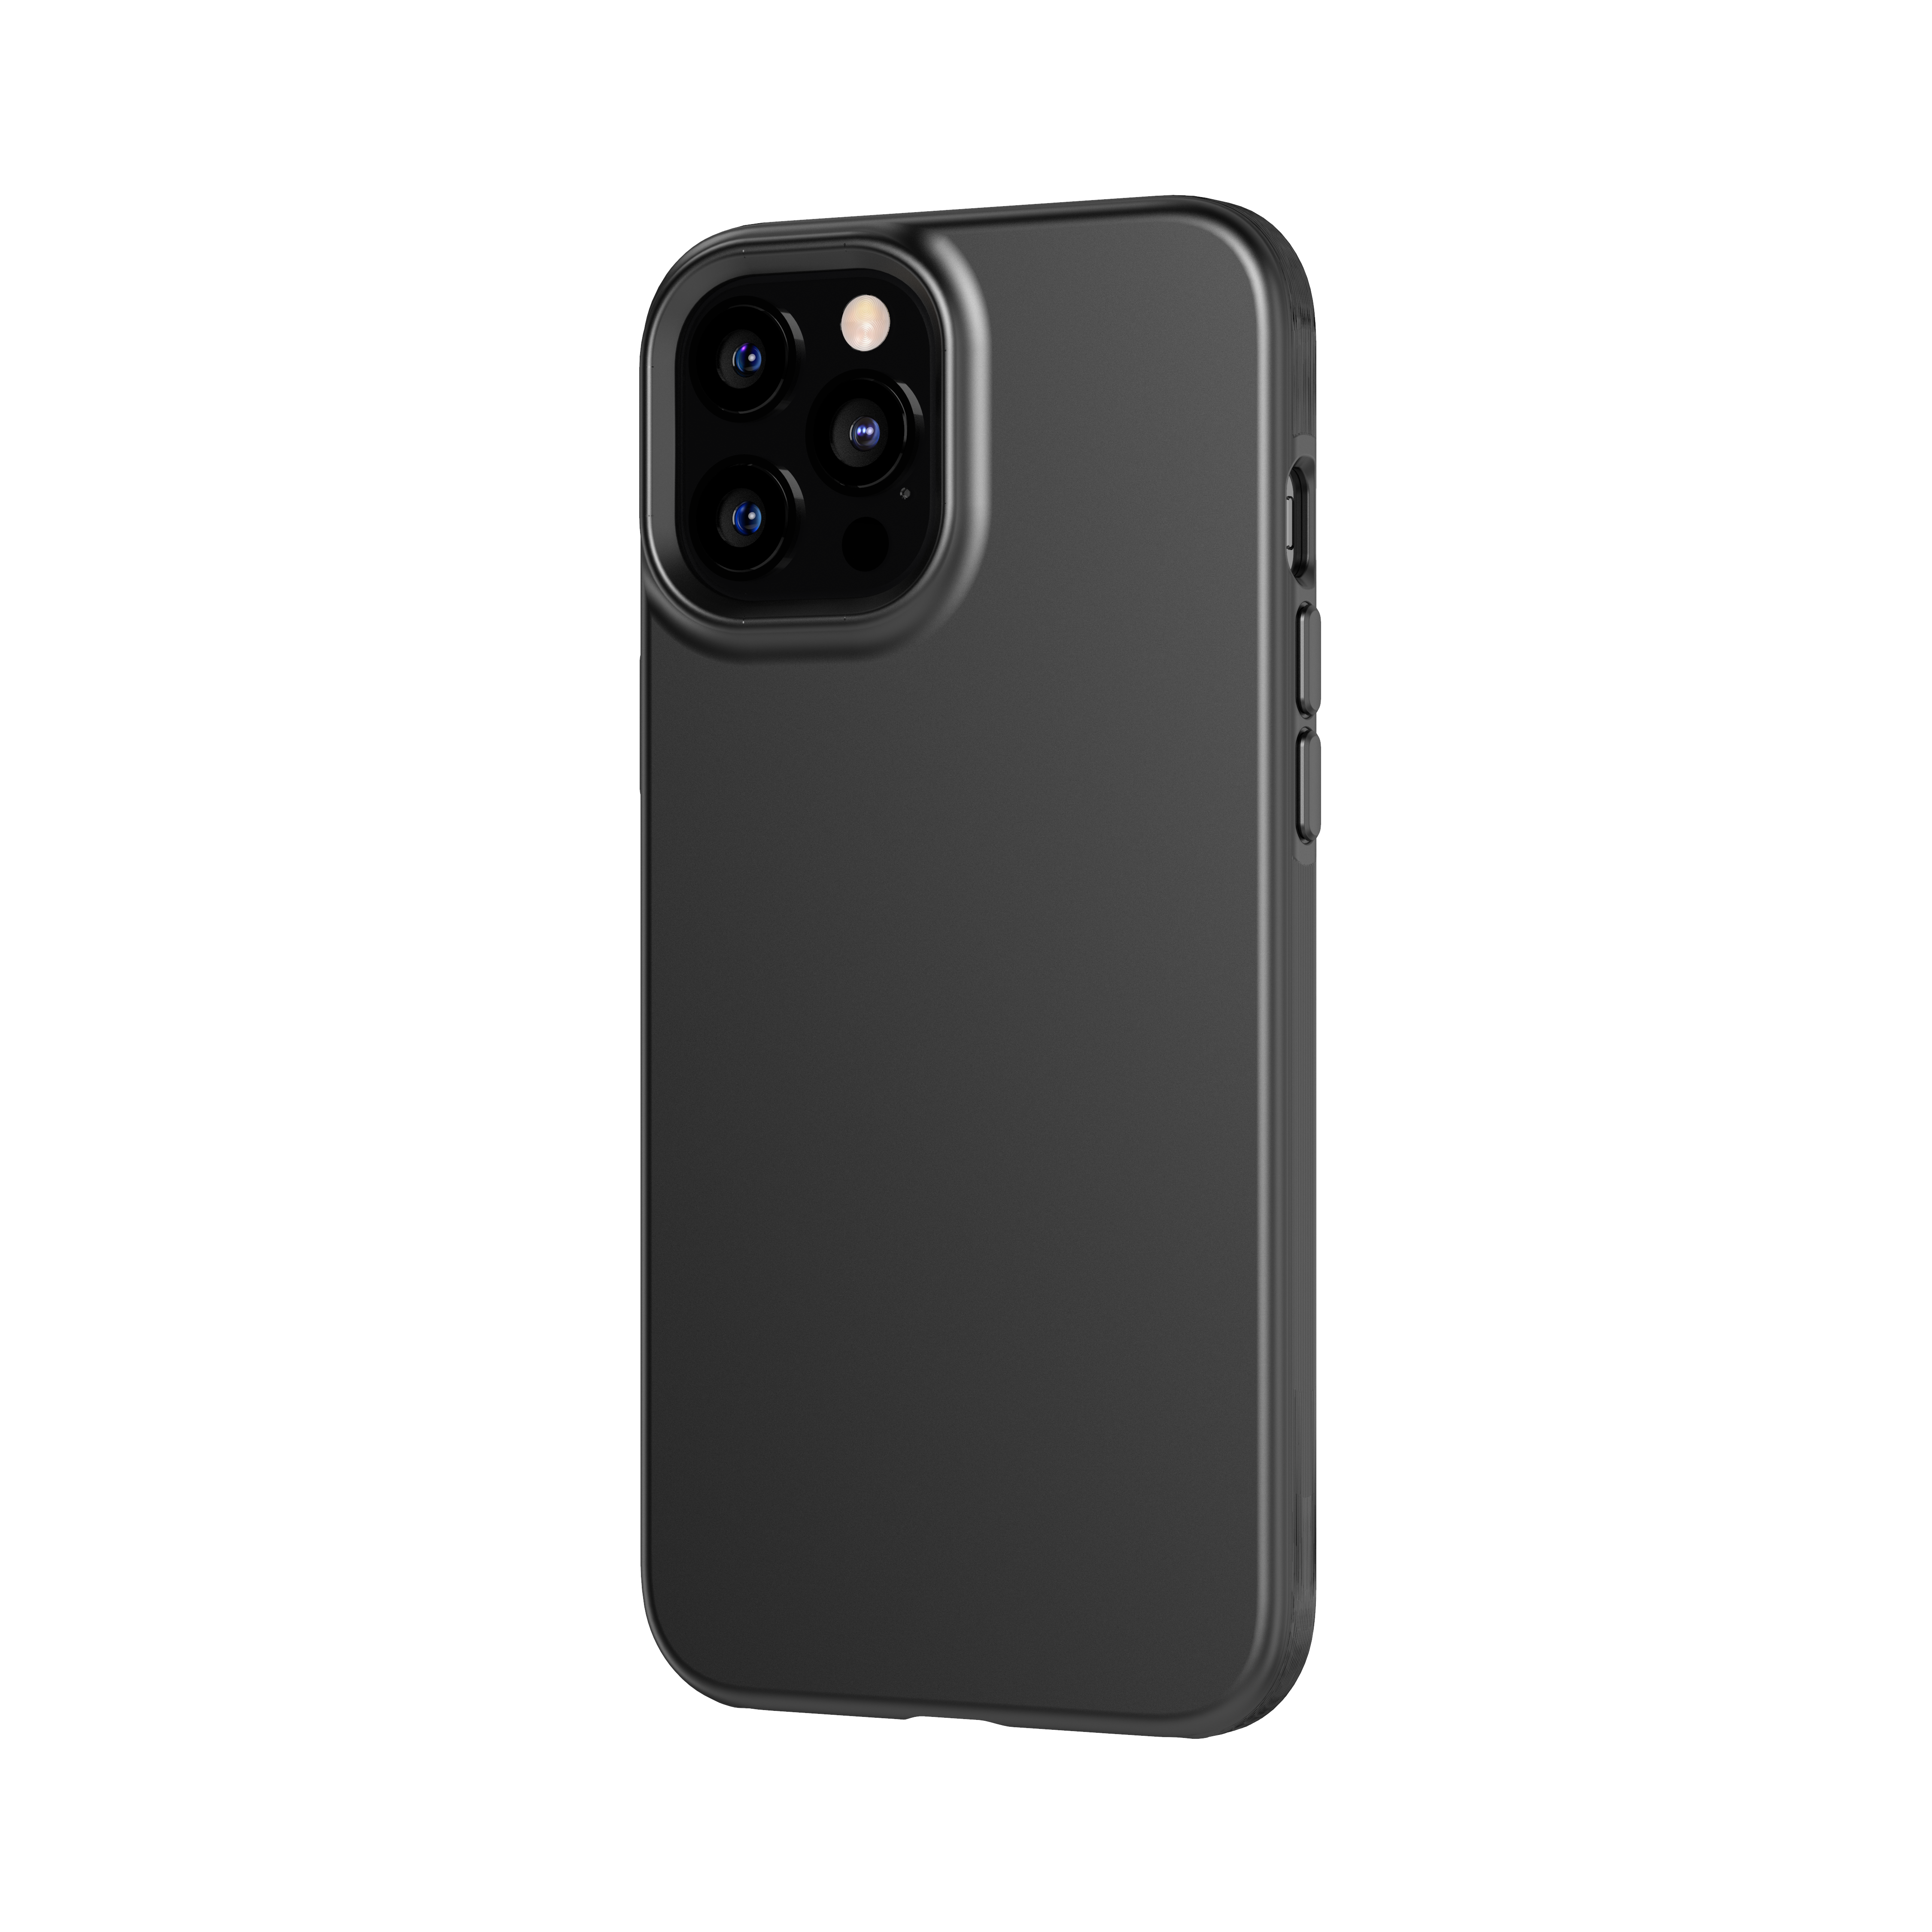 Evo Slim Case iPhone 12/12 Pro Charcoal Black